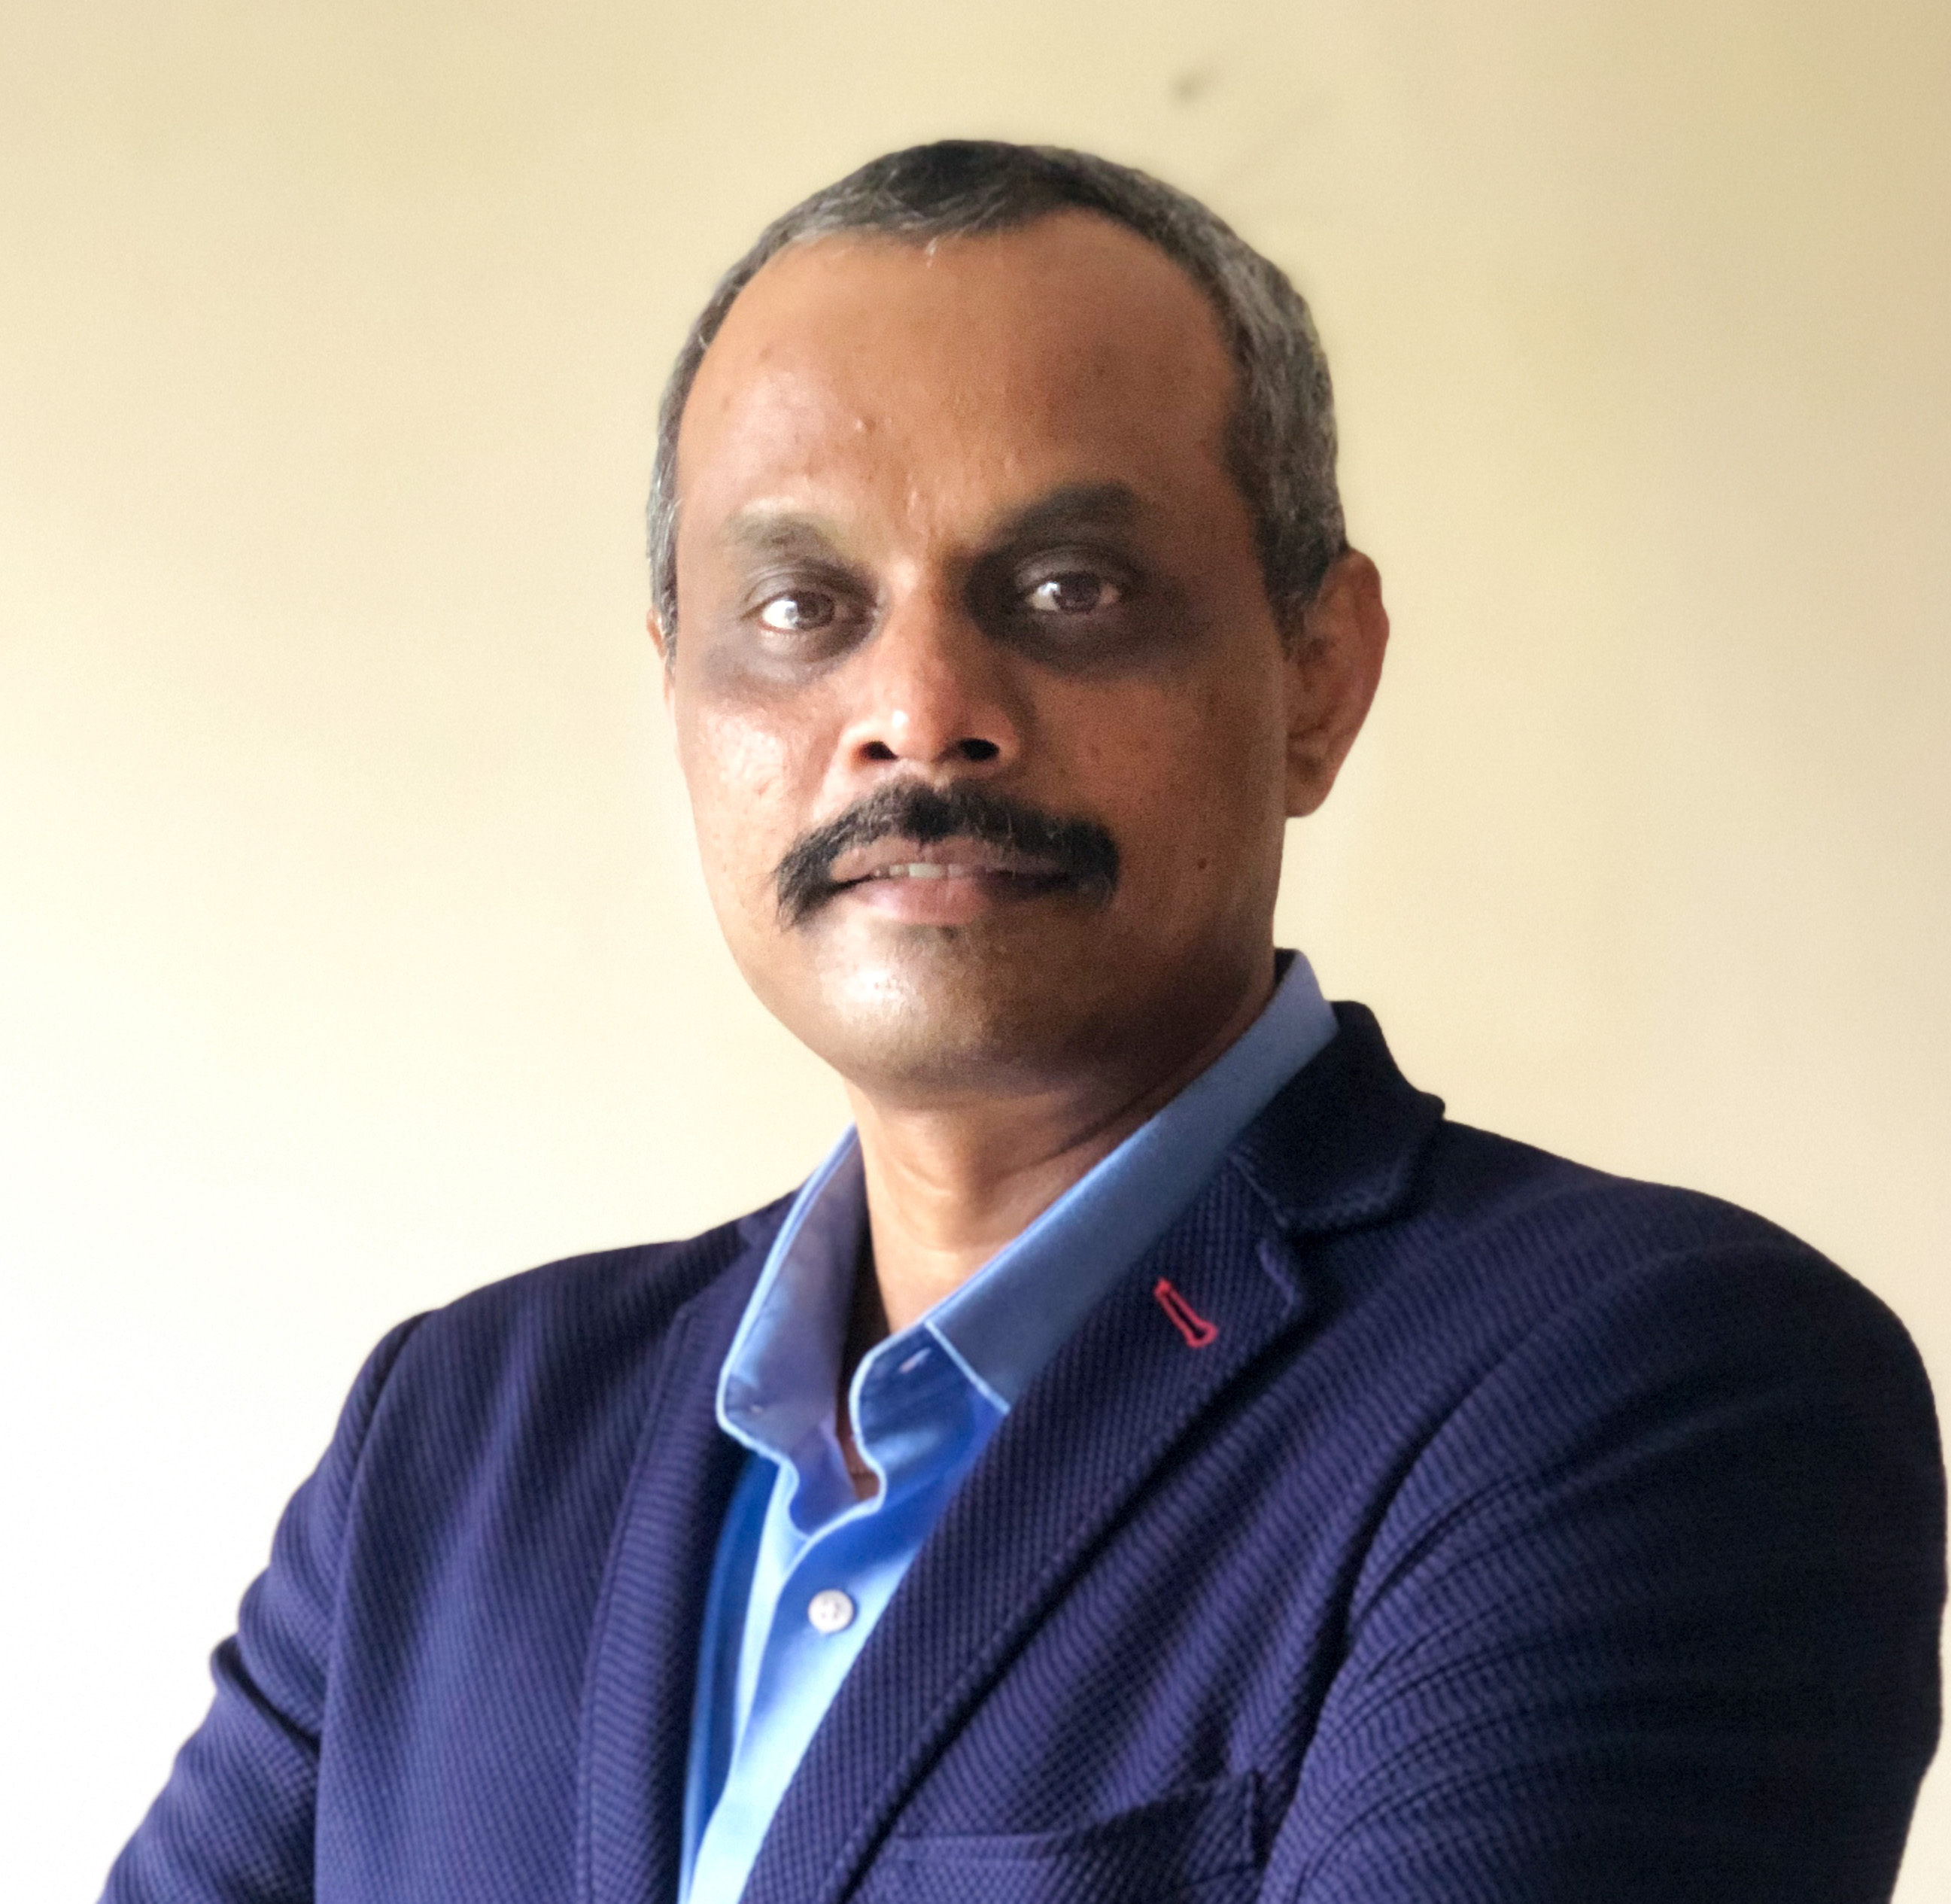 Vasudeva Rao Munnaluri, <span>RVP Sales - India, Zendesk</span>